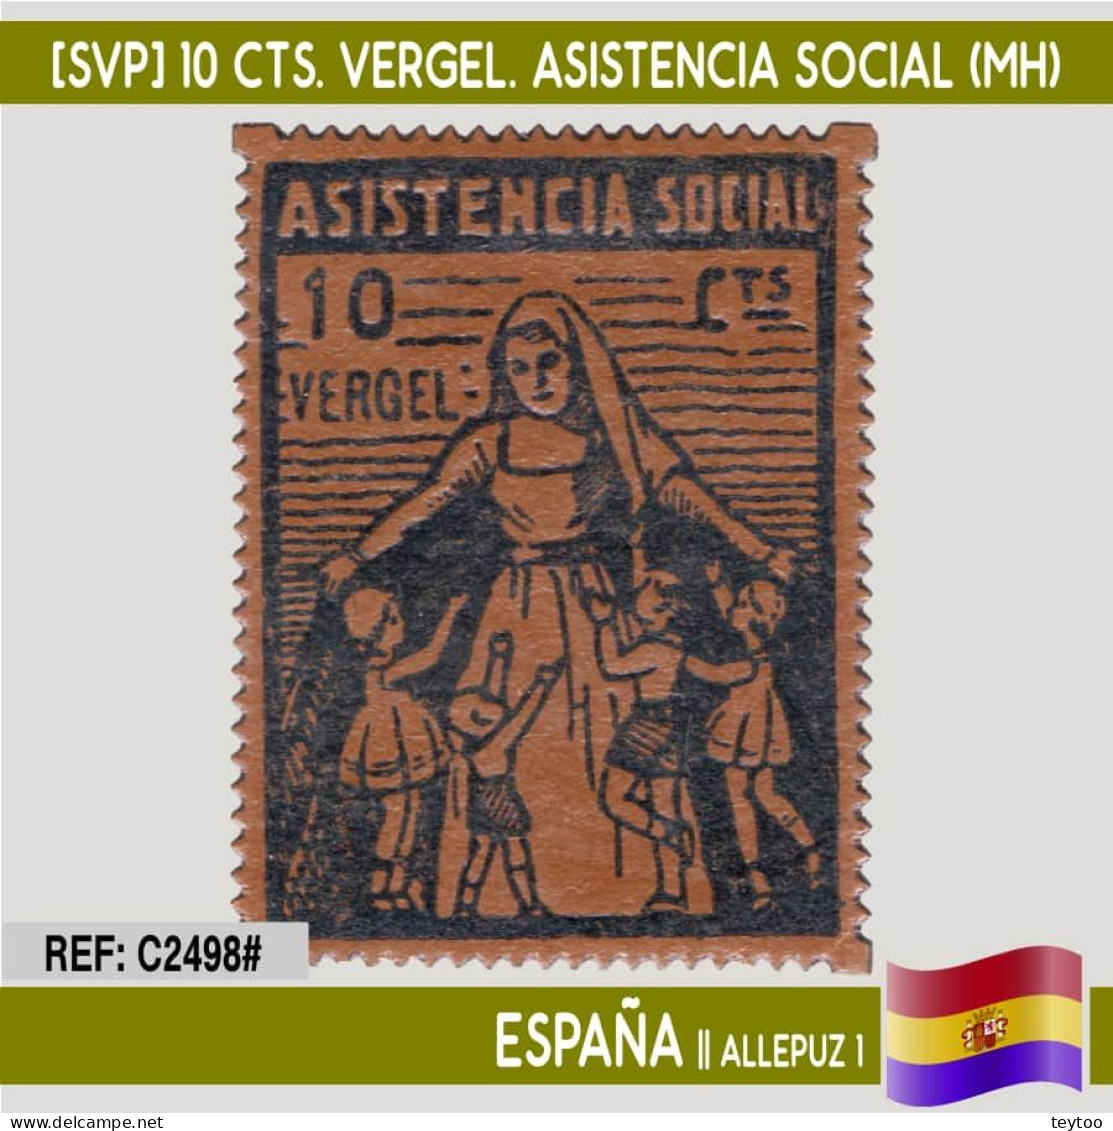 C2498# España [SVP] 10 Cts. Vergel. Asistencia Social (MH) - Republican Issues